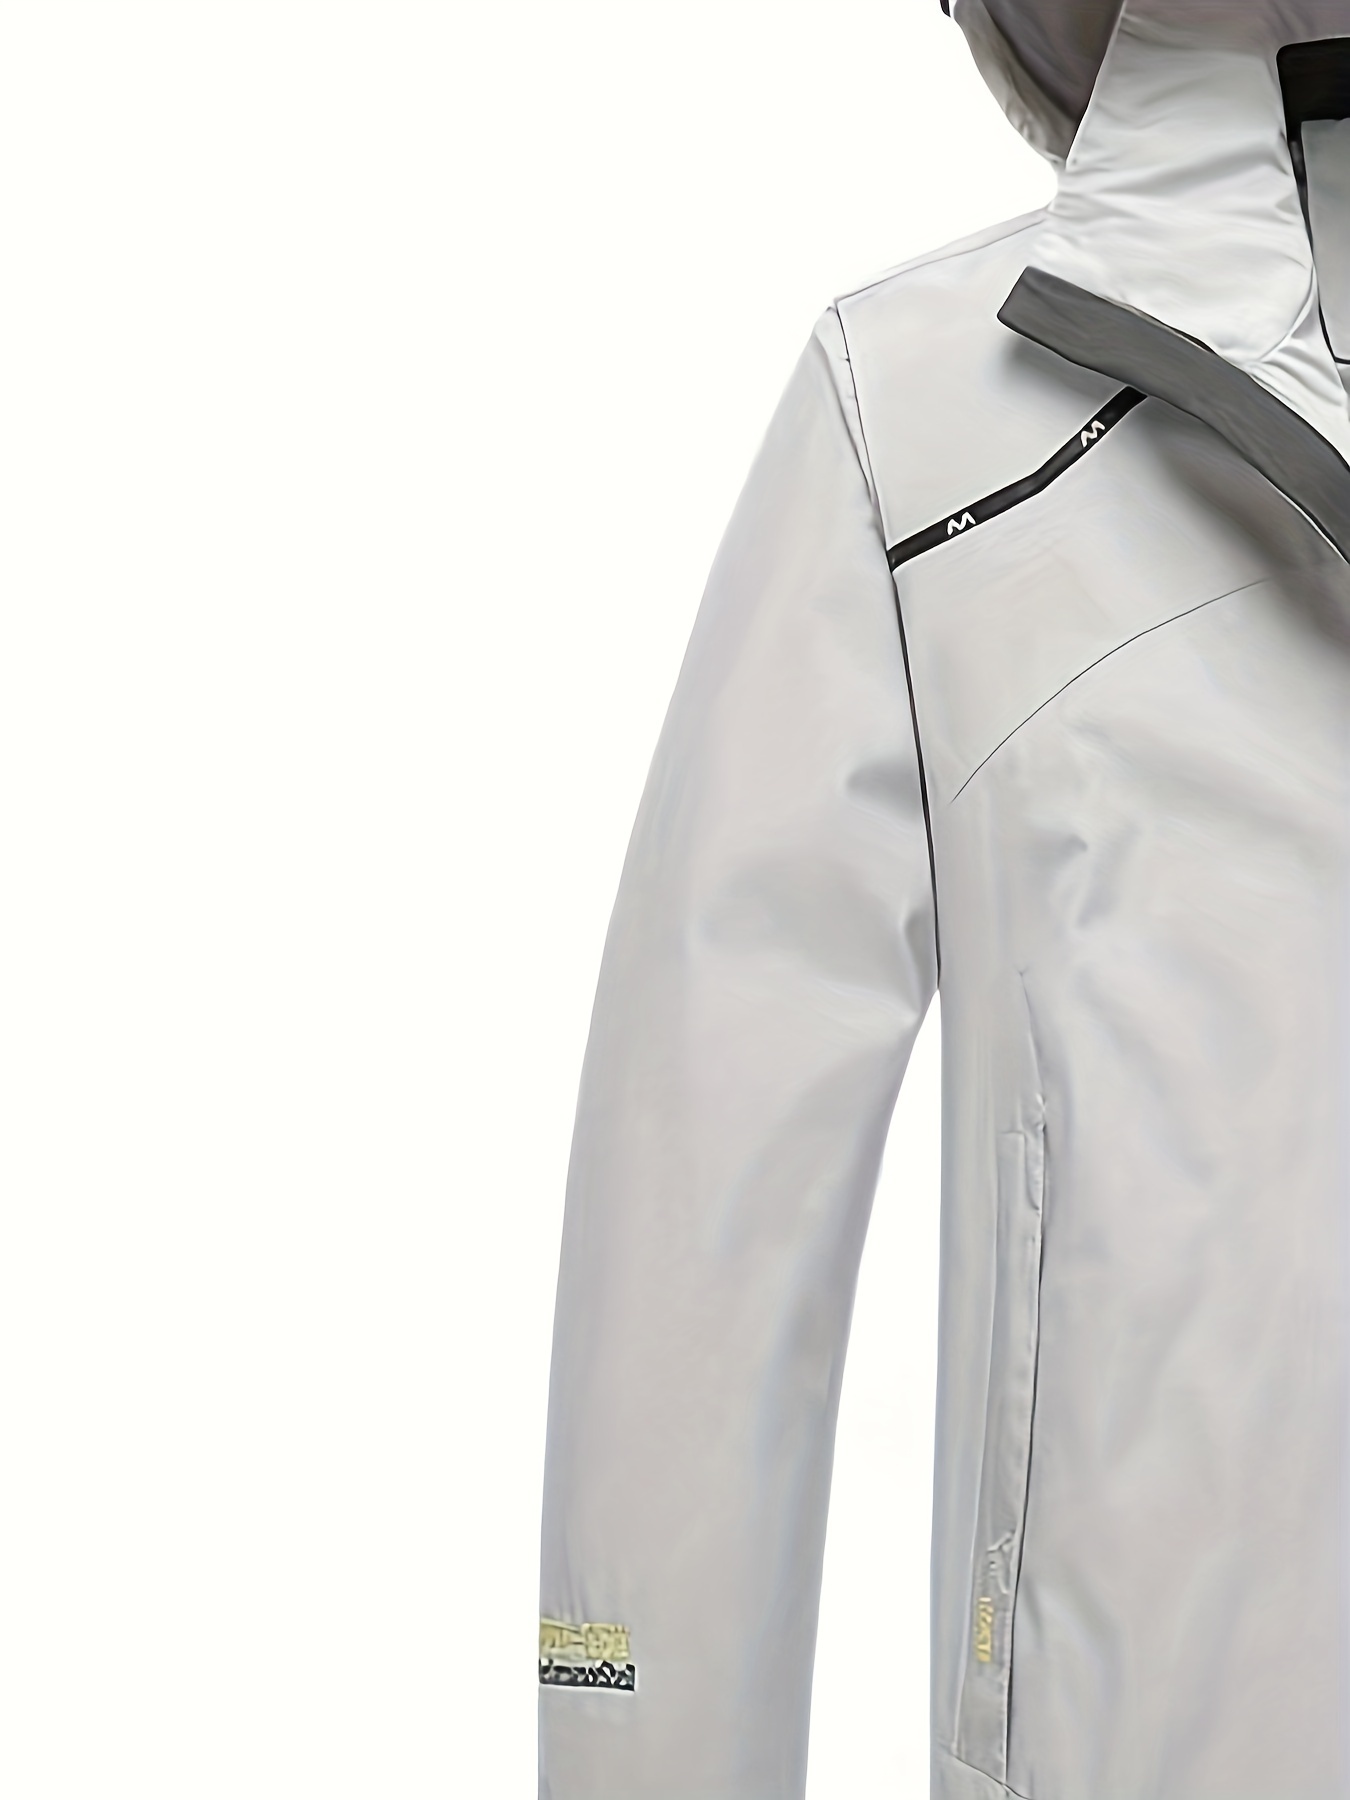 mens waterproof rain jacket lightweight raincoat windbreaker with hood for hiking travel outdoor details 3